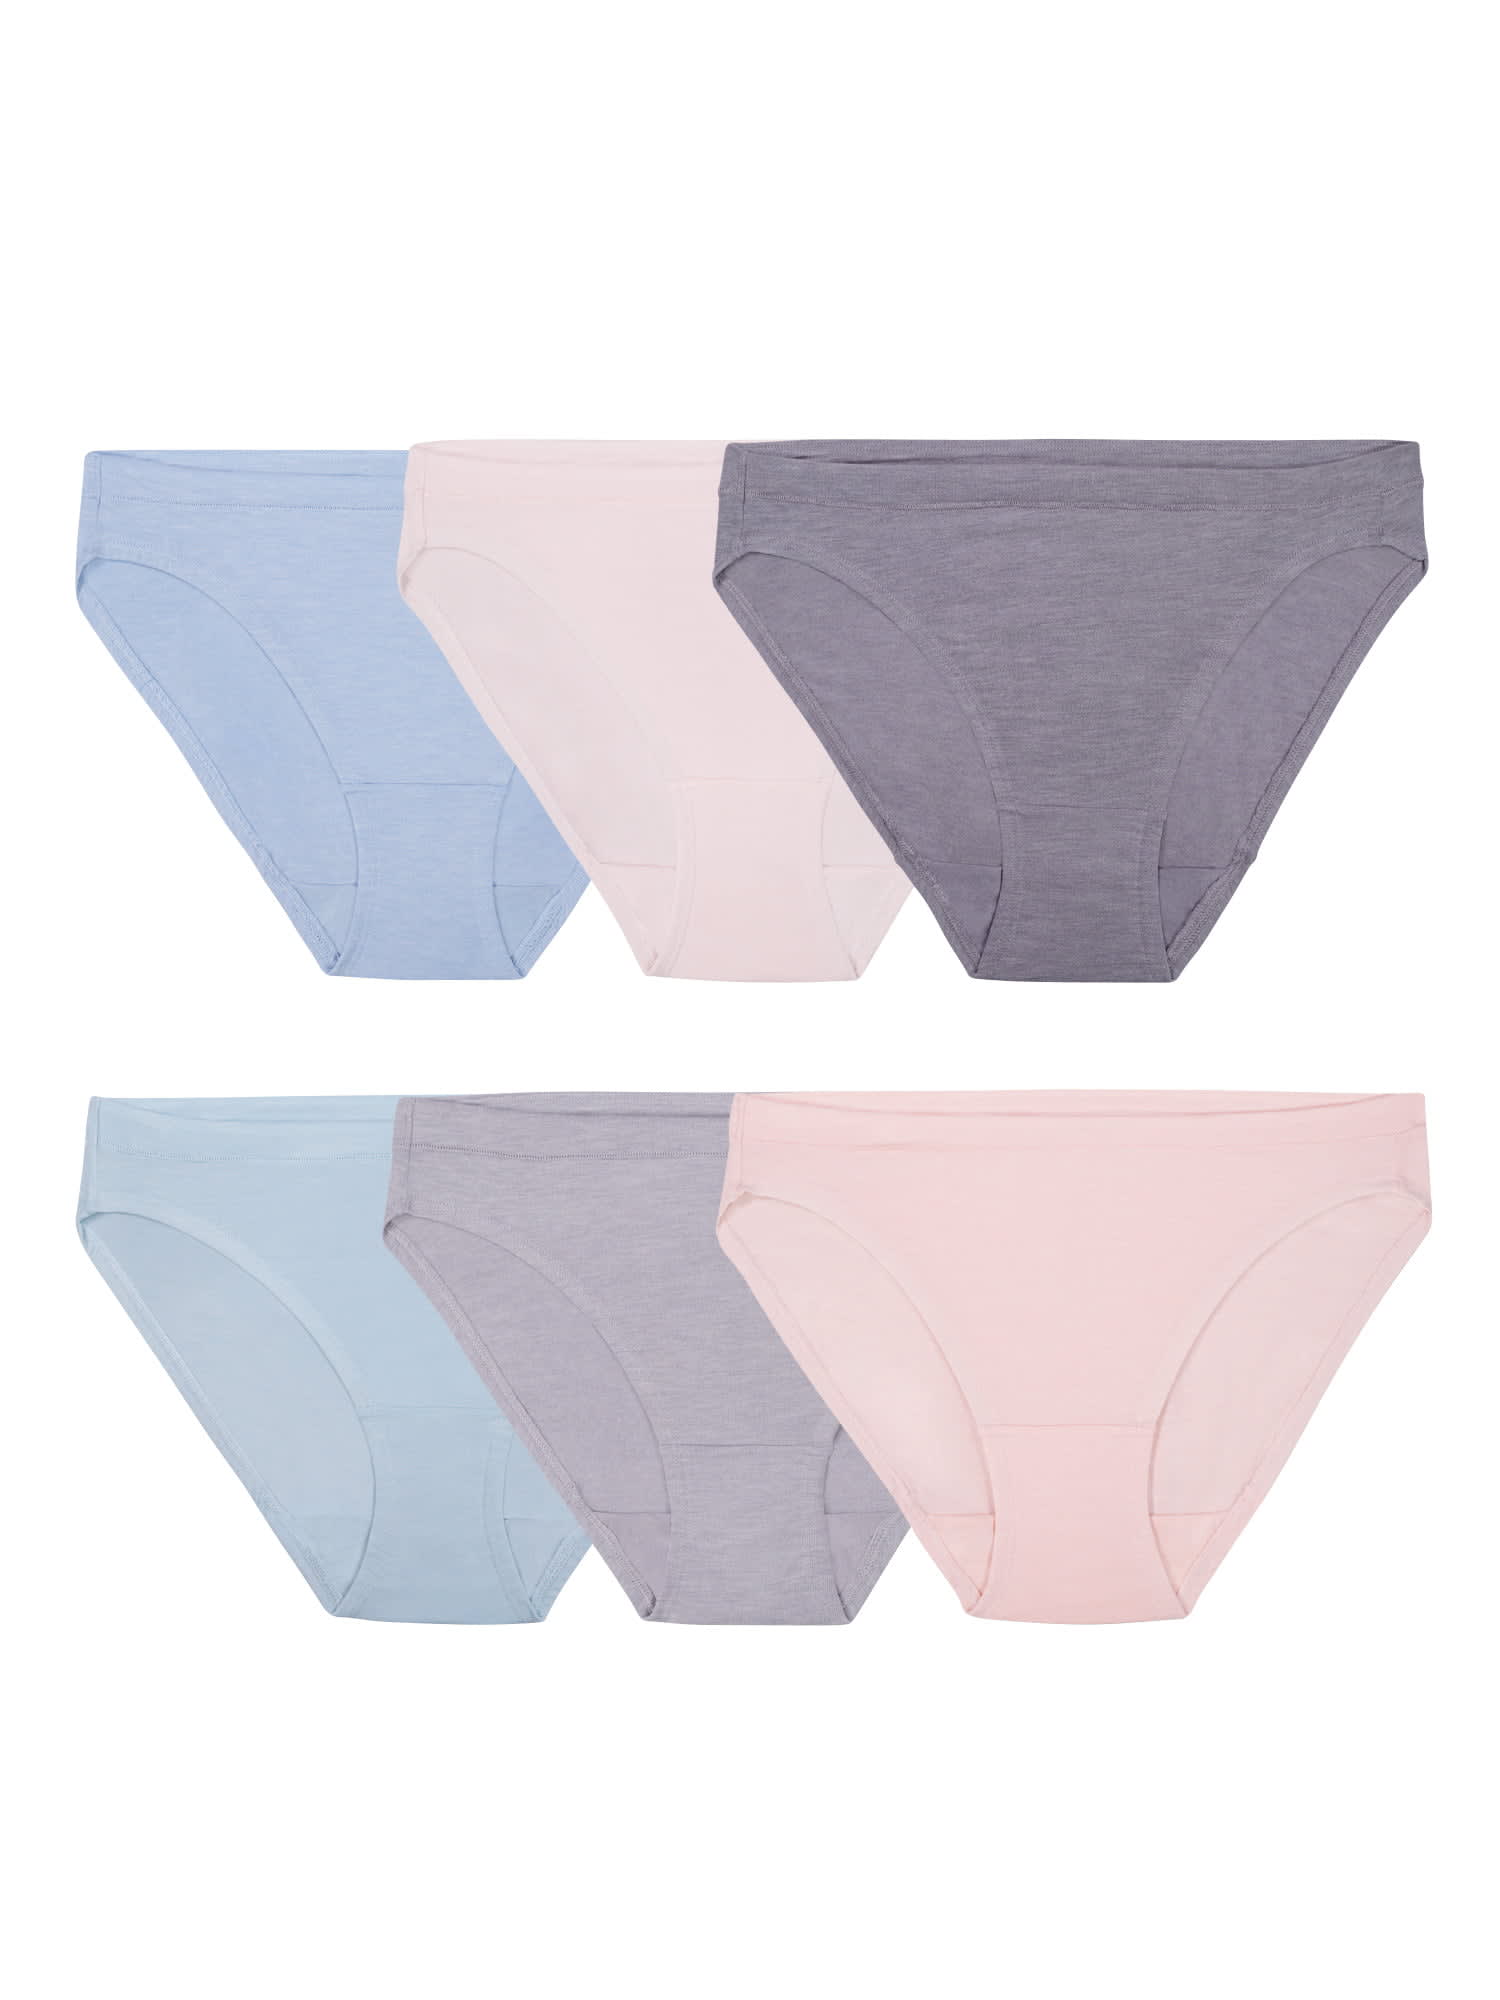 Hanes Women's Cotton Brief Underwear, 10-Pack - DroneUp Delivery